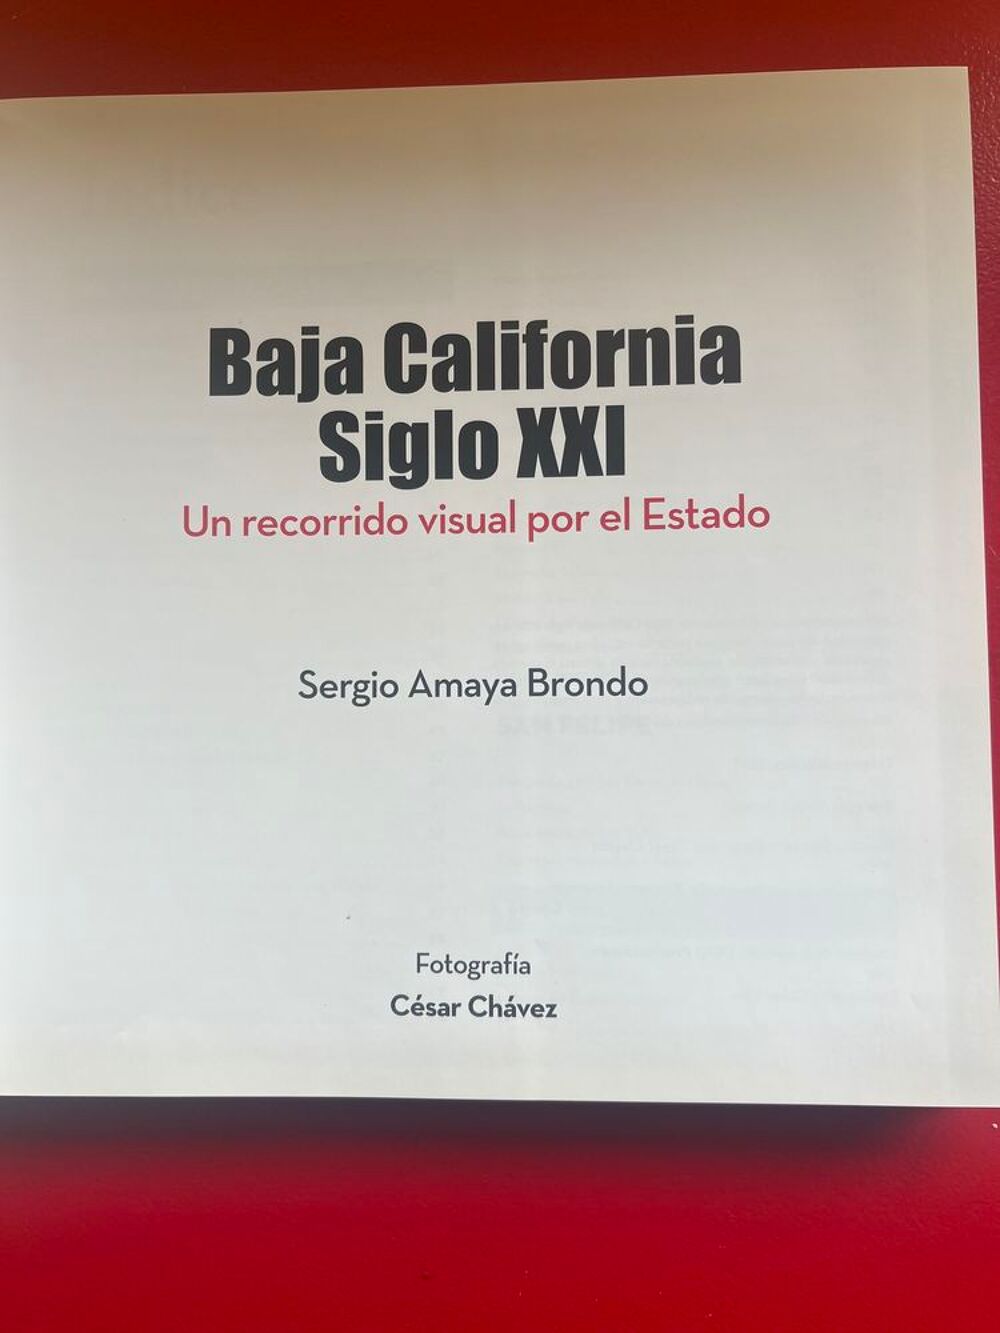 Baja California livre Livres et BD